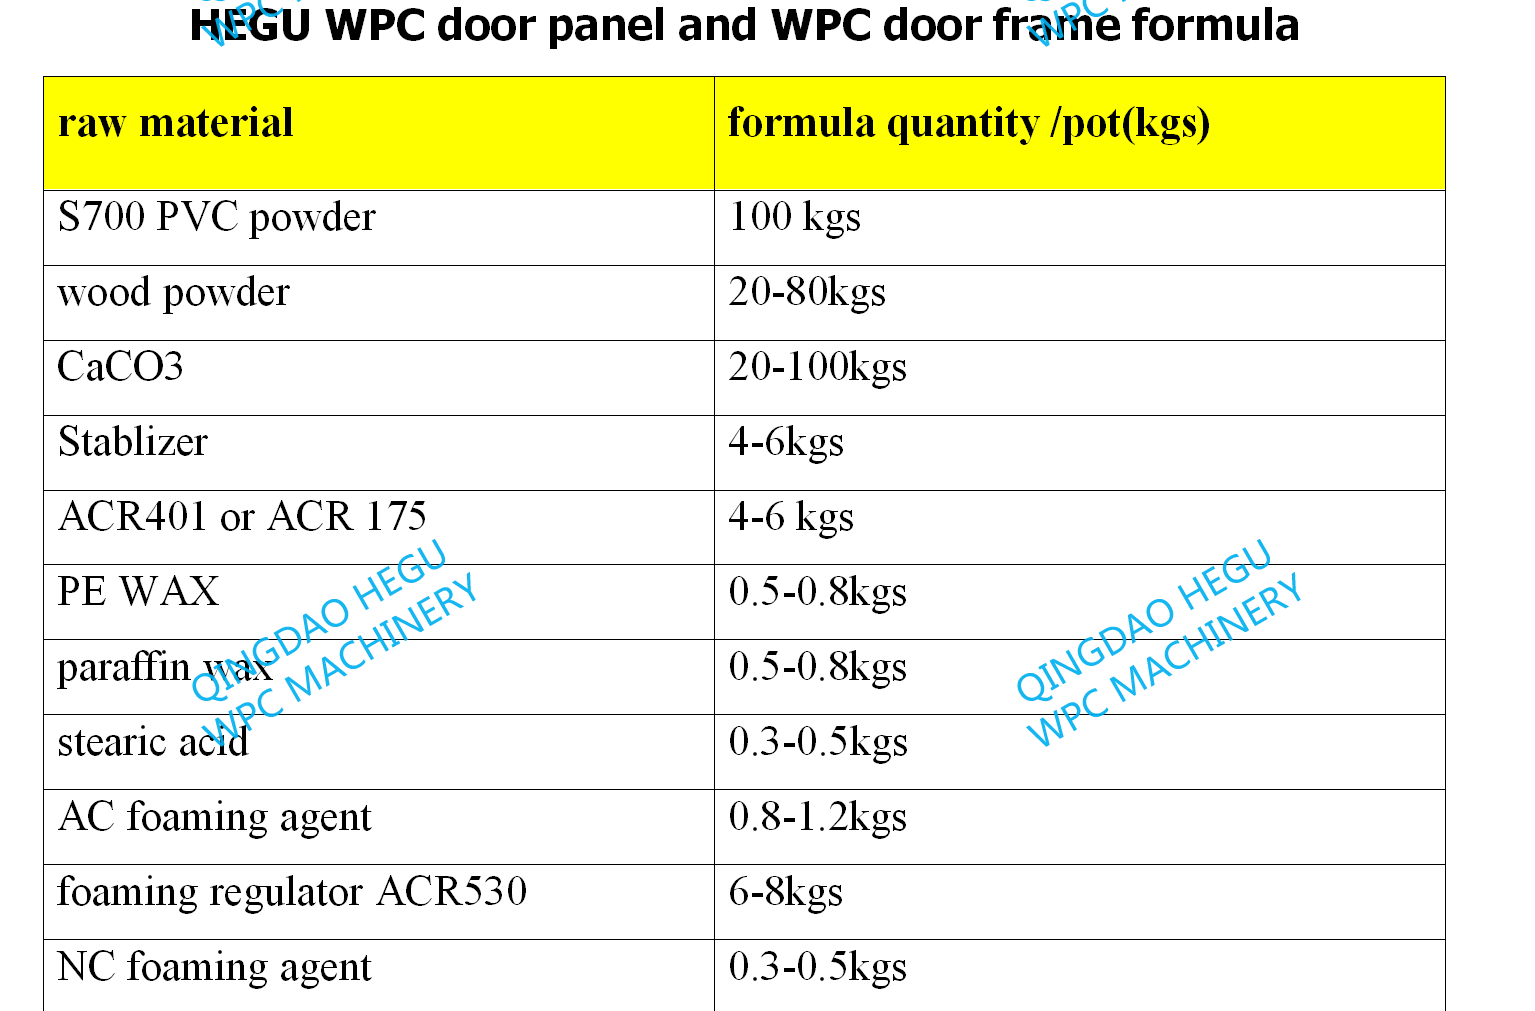 WPC door material and formula